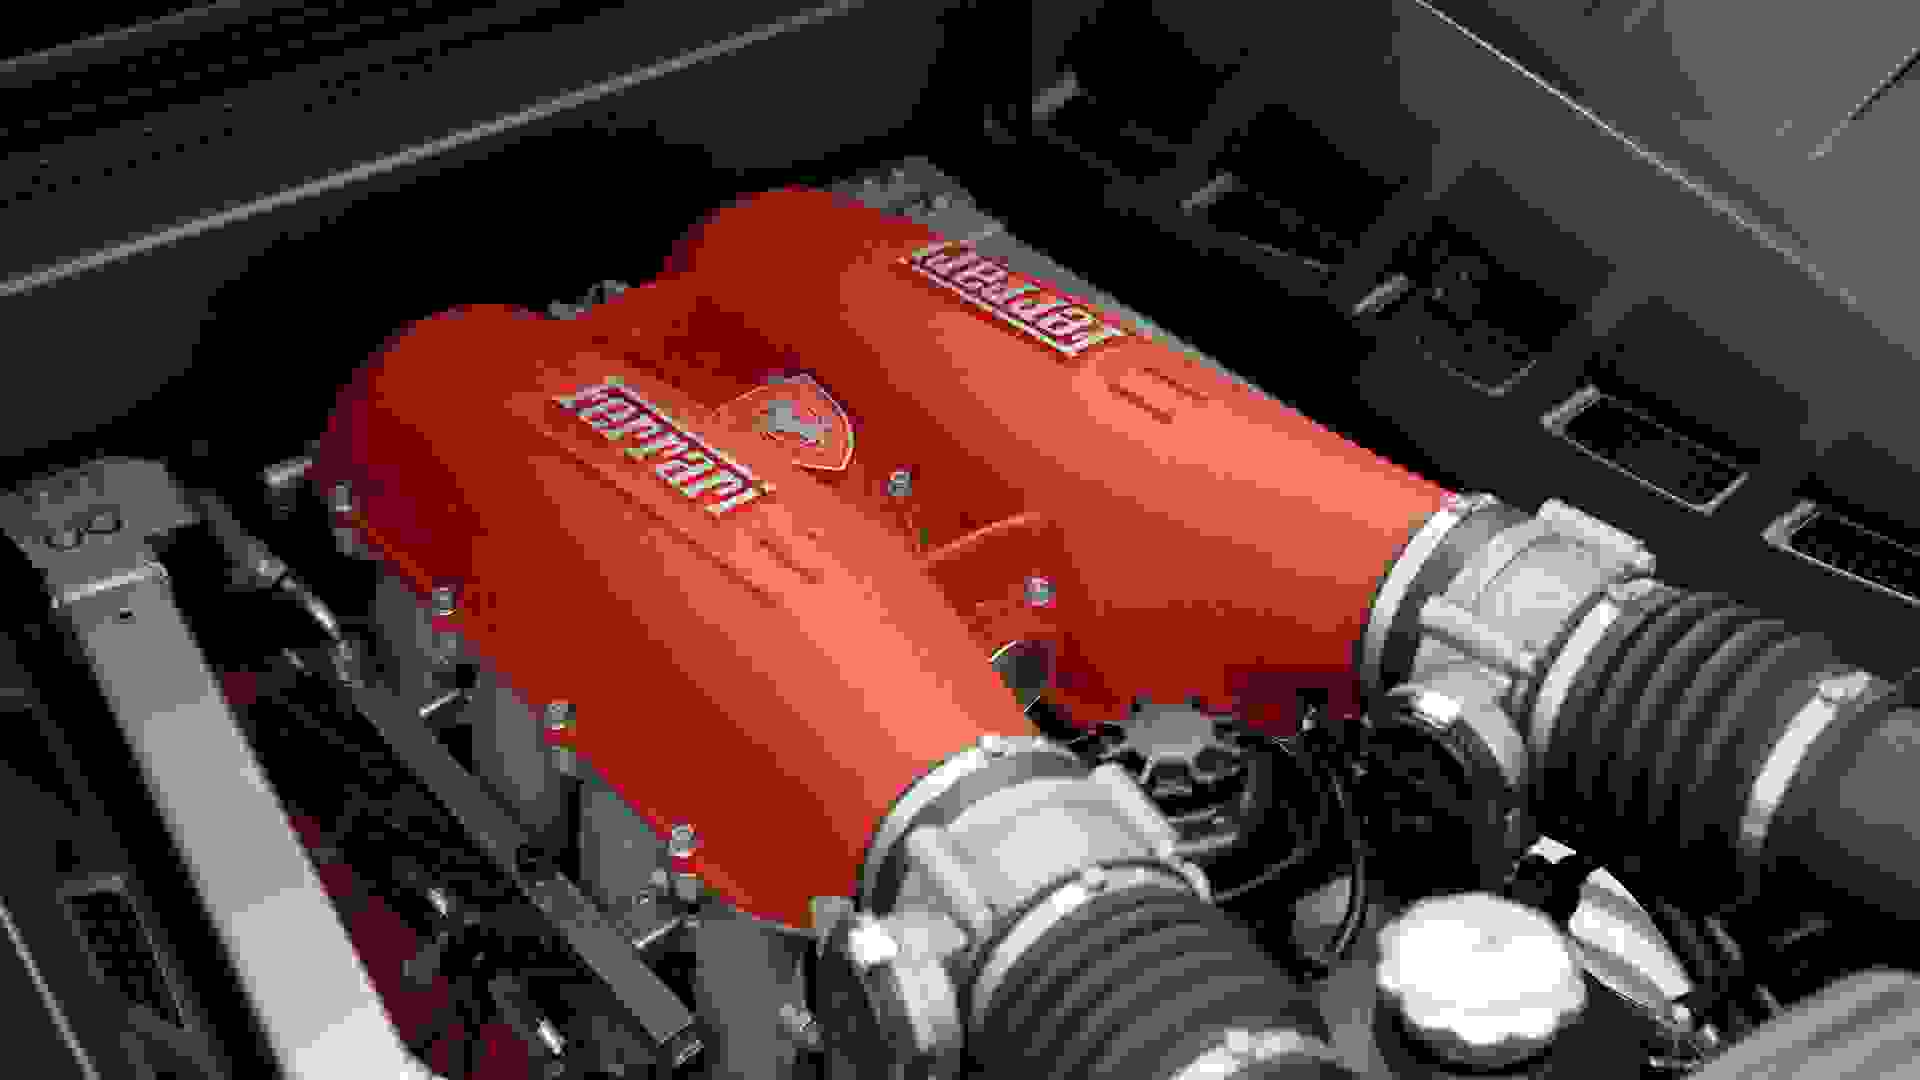 Ferrari F430 Photo d088ea79-9131-48d8-97b4-459ab22654ed.jpg